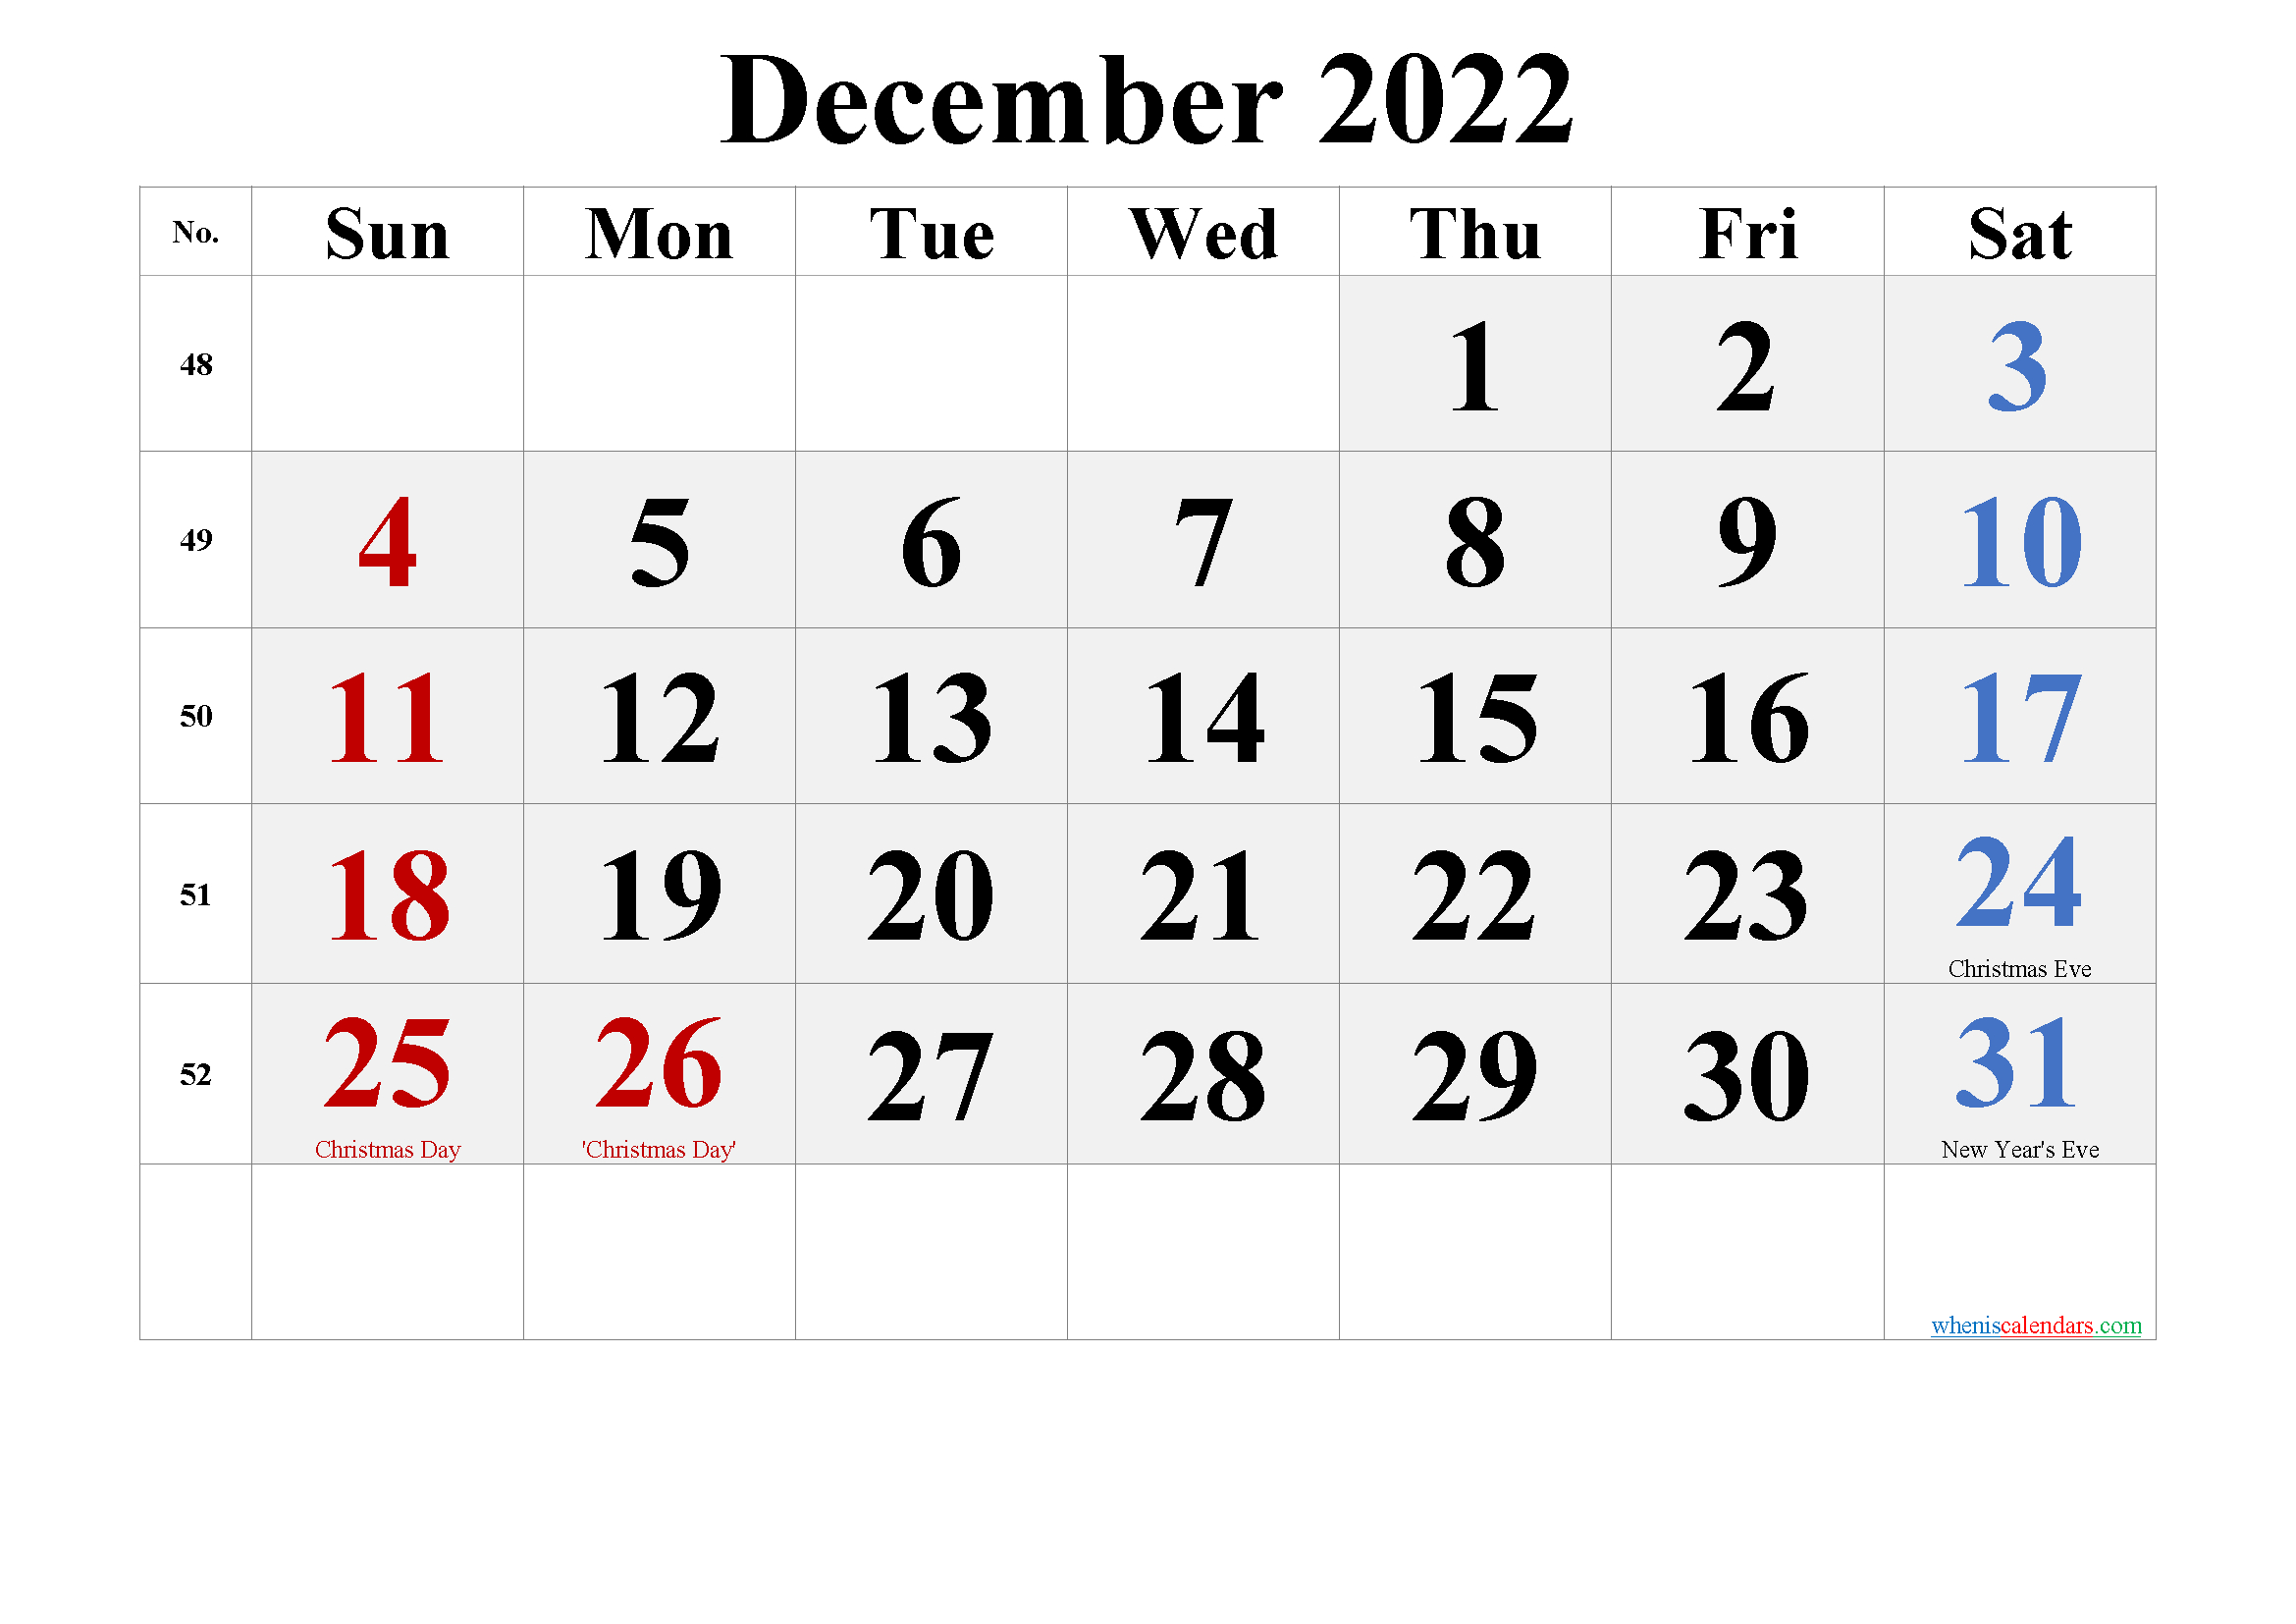 Get November December 2022 Calendar